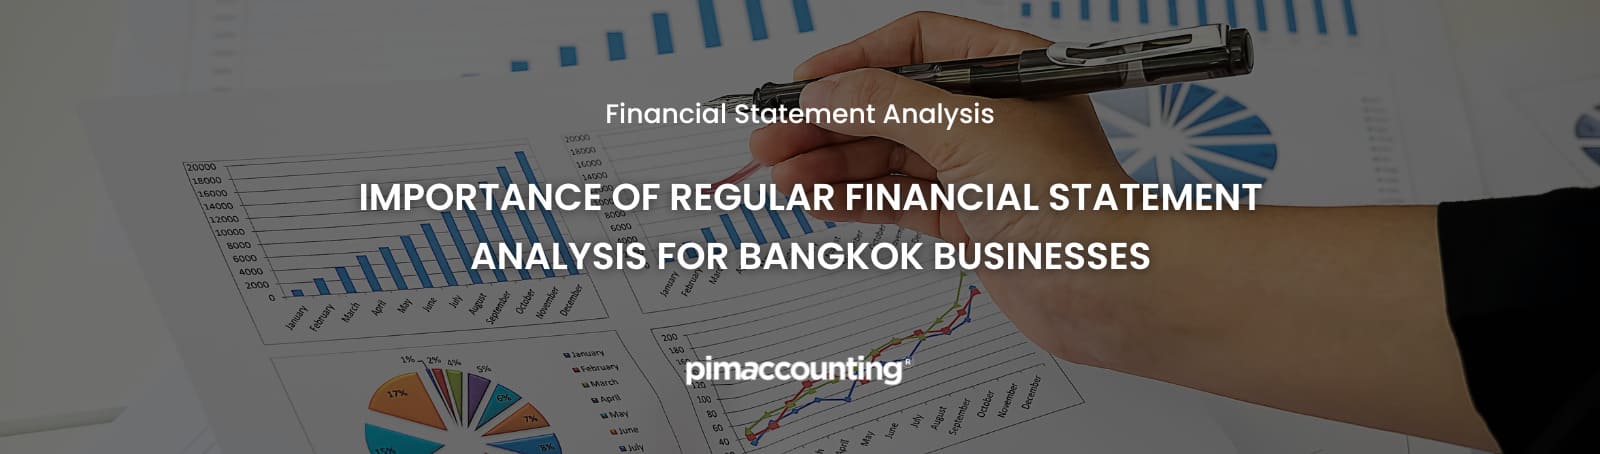 Financial Statement Analysis - Pimaccounting